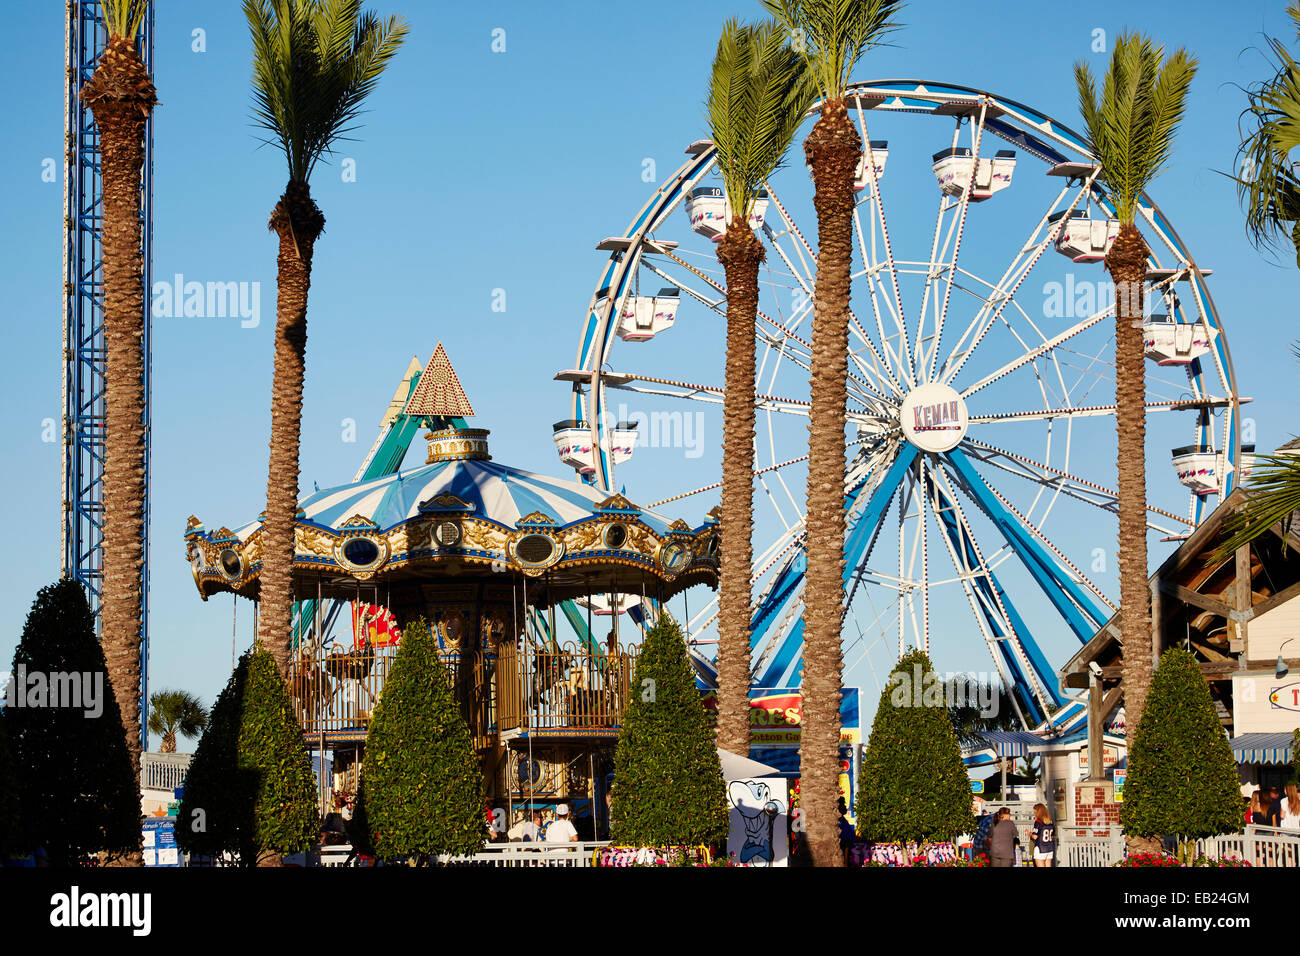 Attractions at Kemah Boardwalk, Houston, Texas, USA Stock Photo